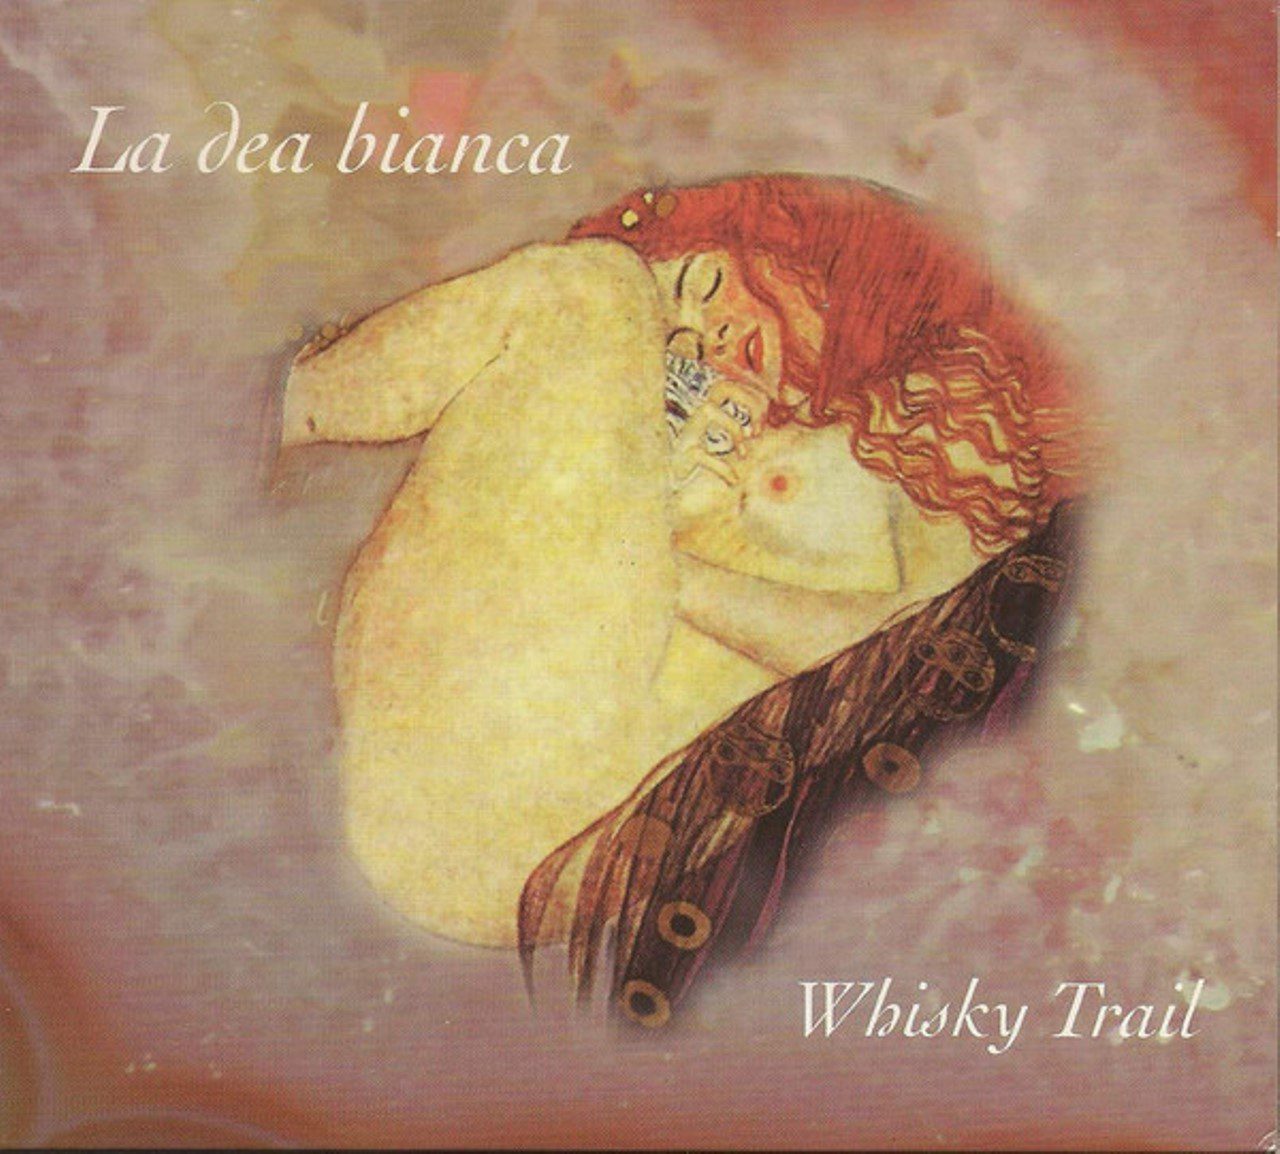 Whisky Trail - La Dea Bianca cover album